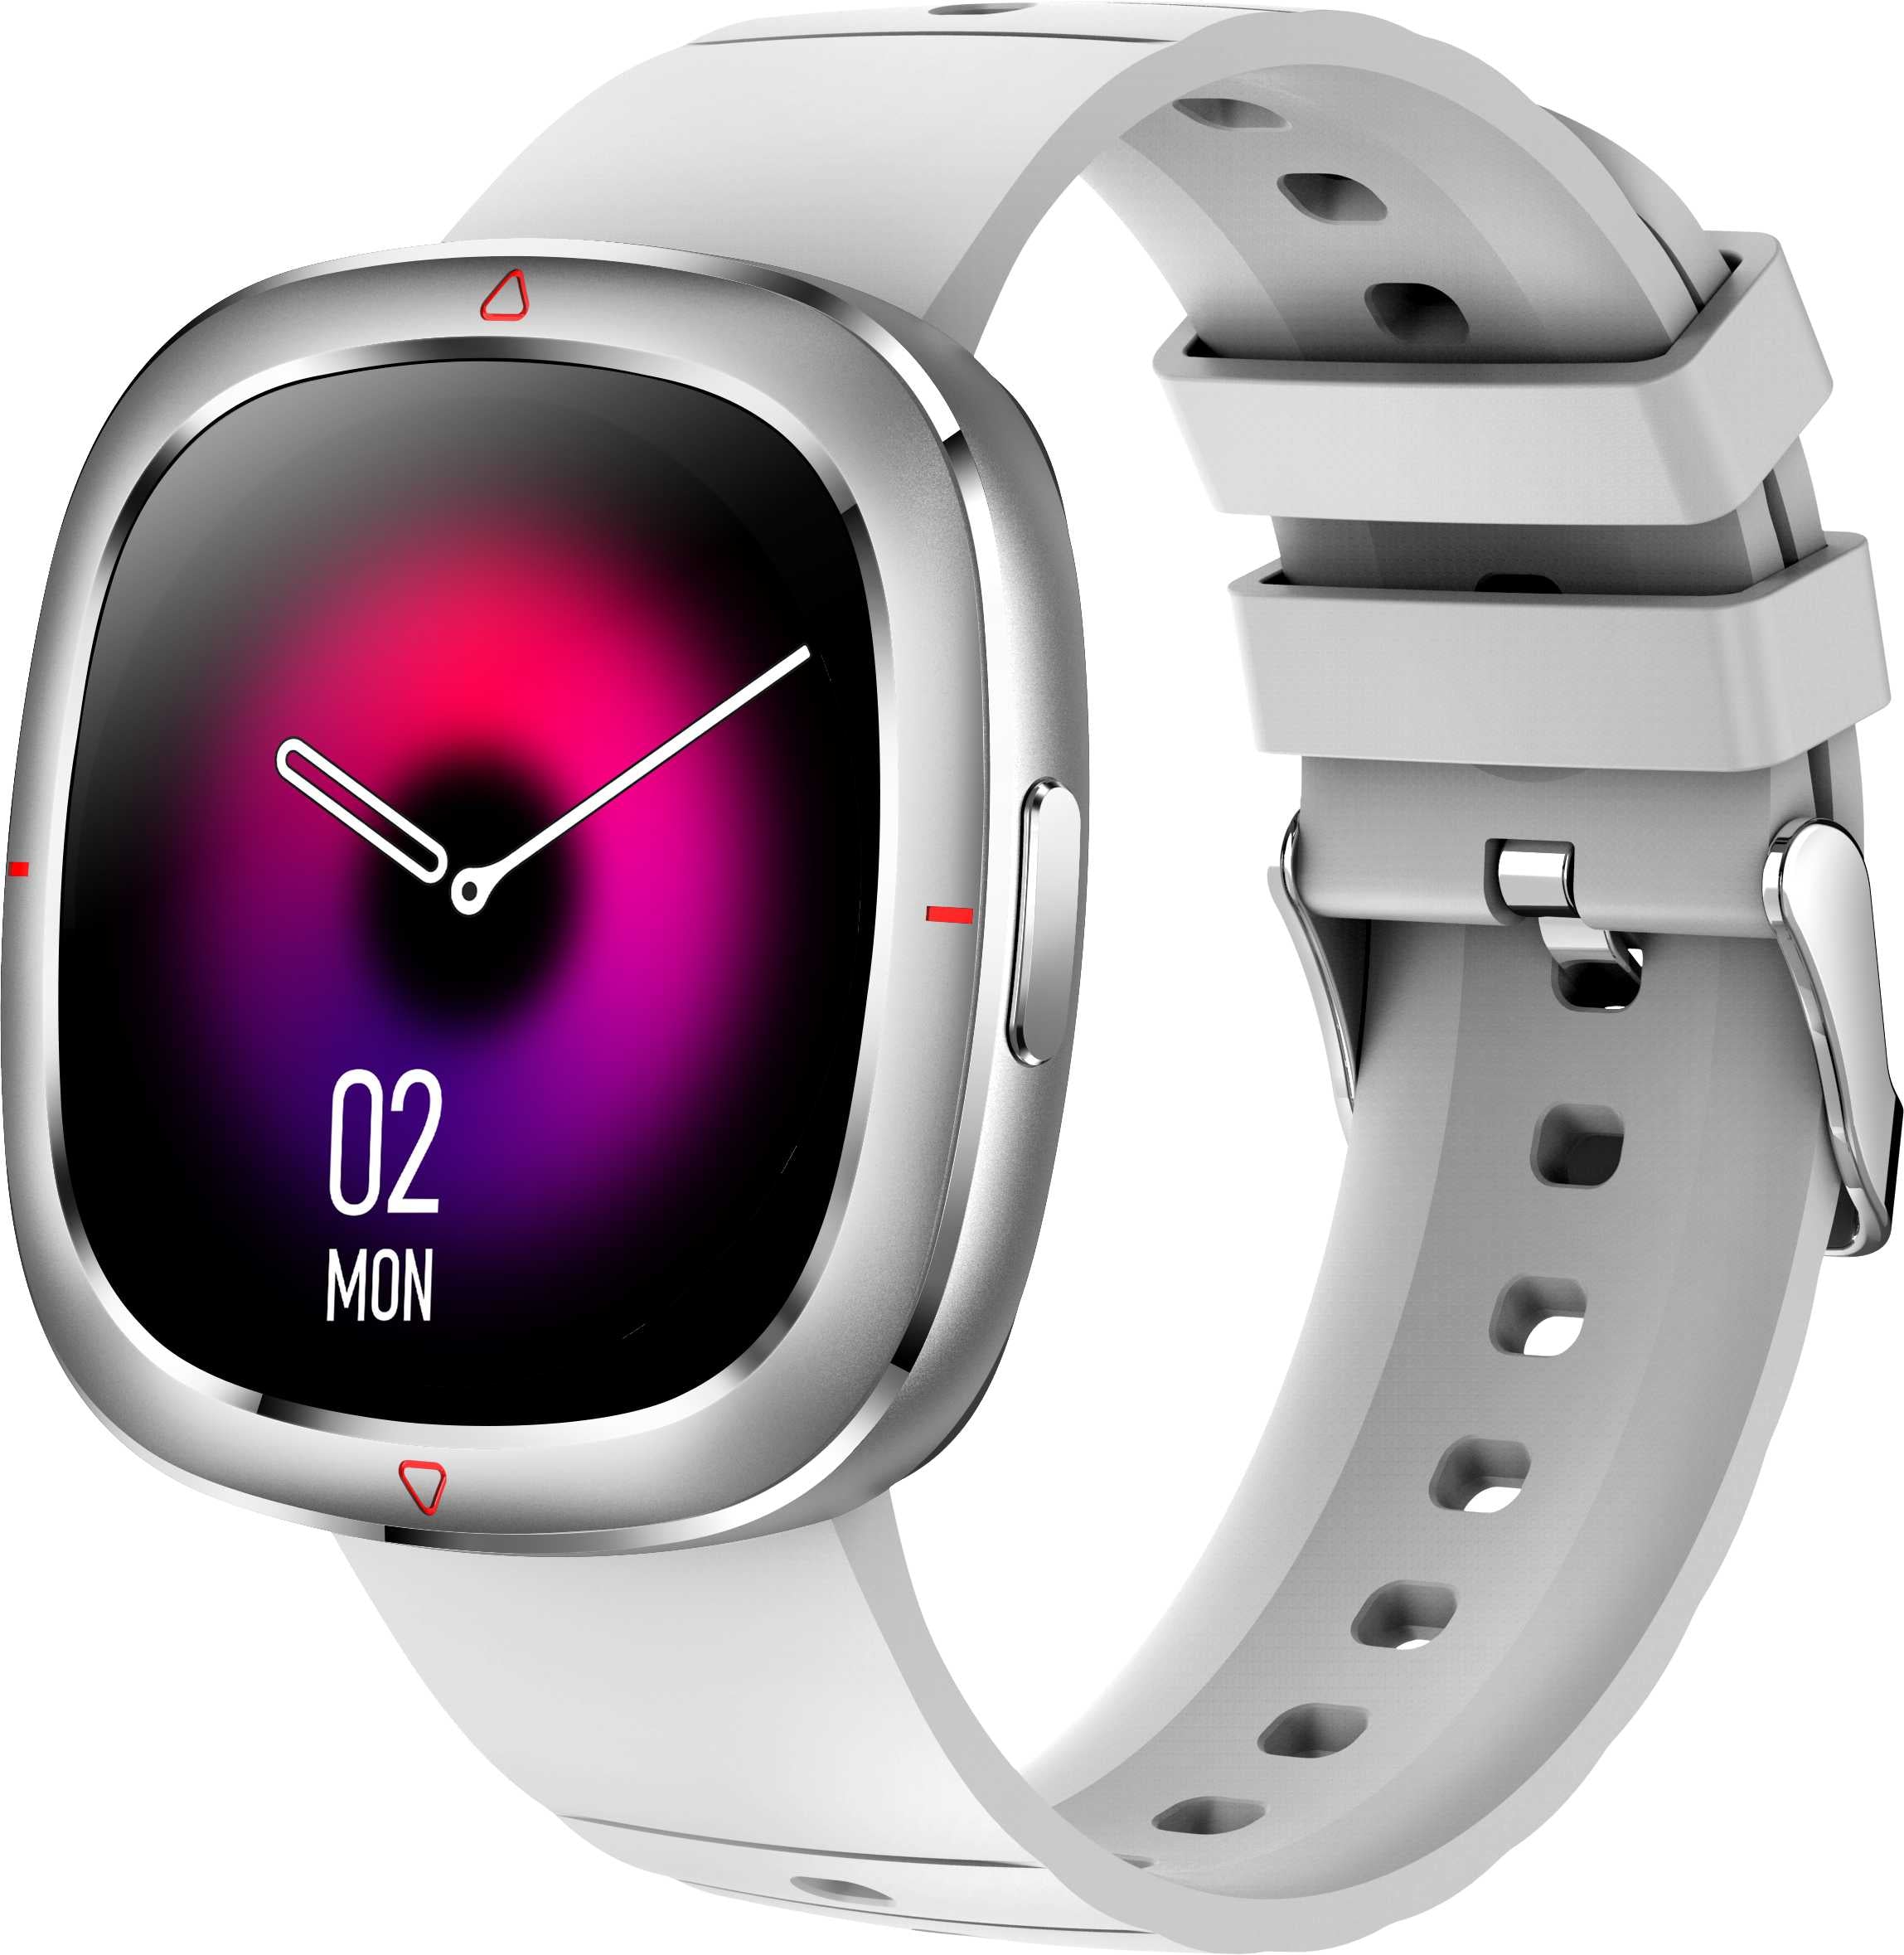 Garmin Vivoactive 5 review: a great $300 Apple Watch rival | Digital Trends